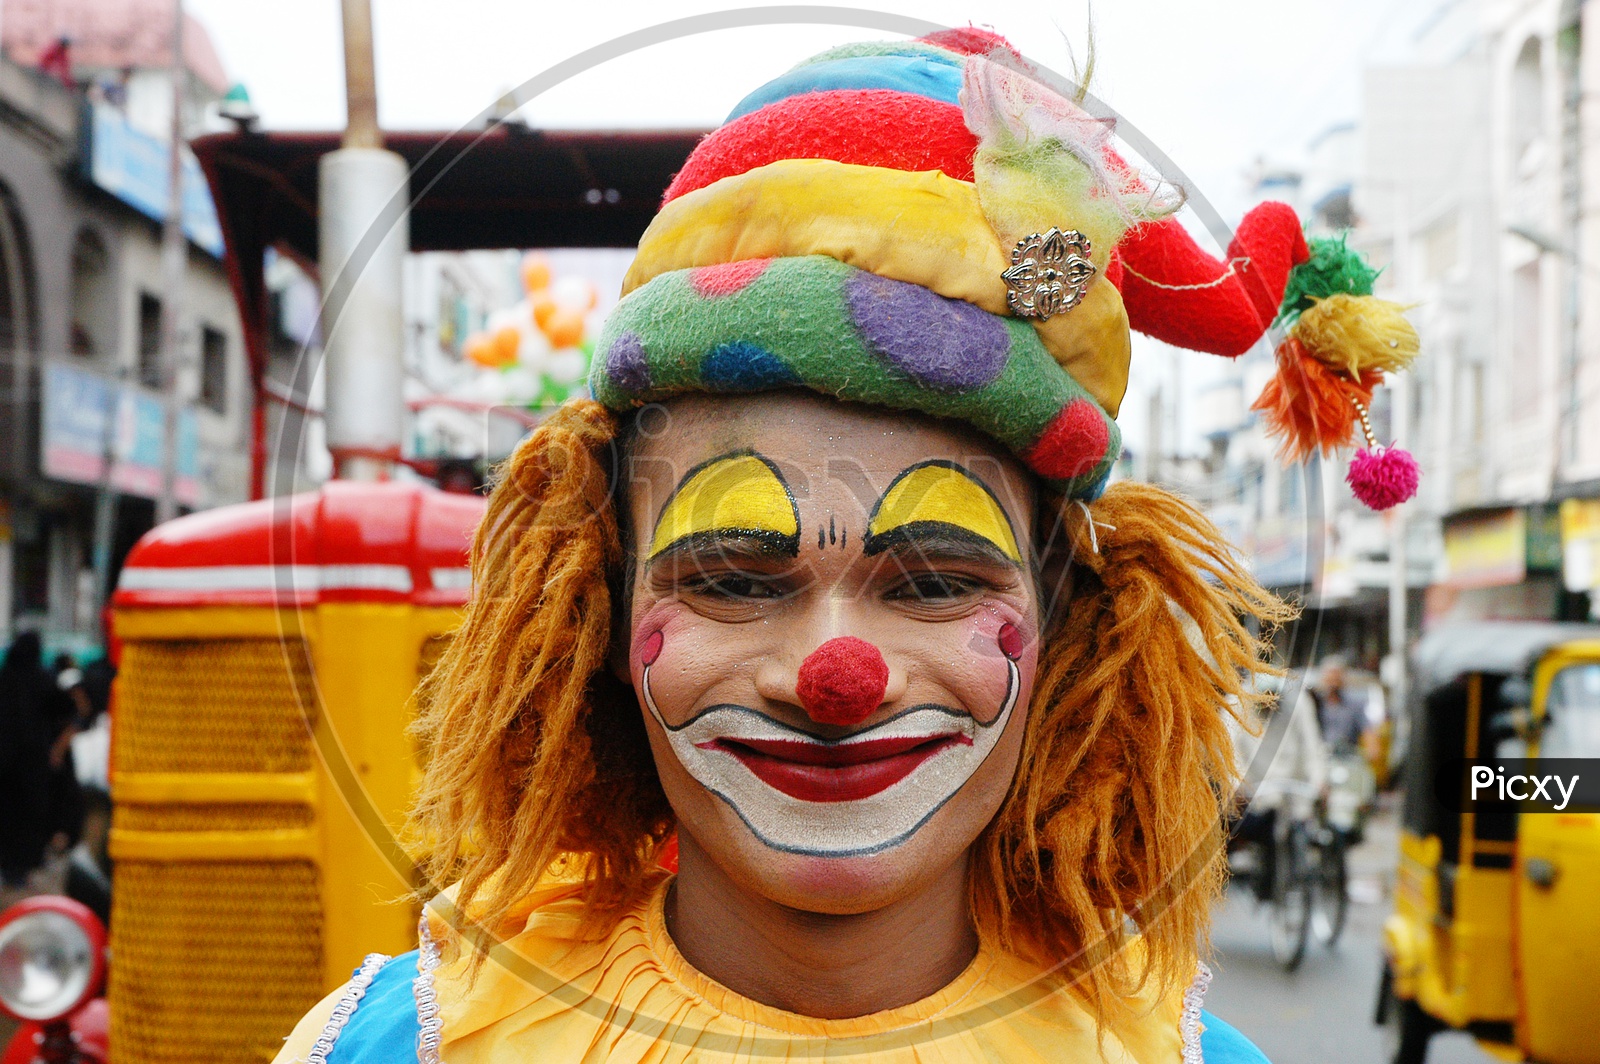 A smiling clown